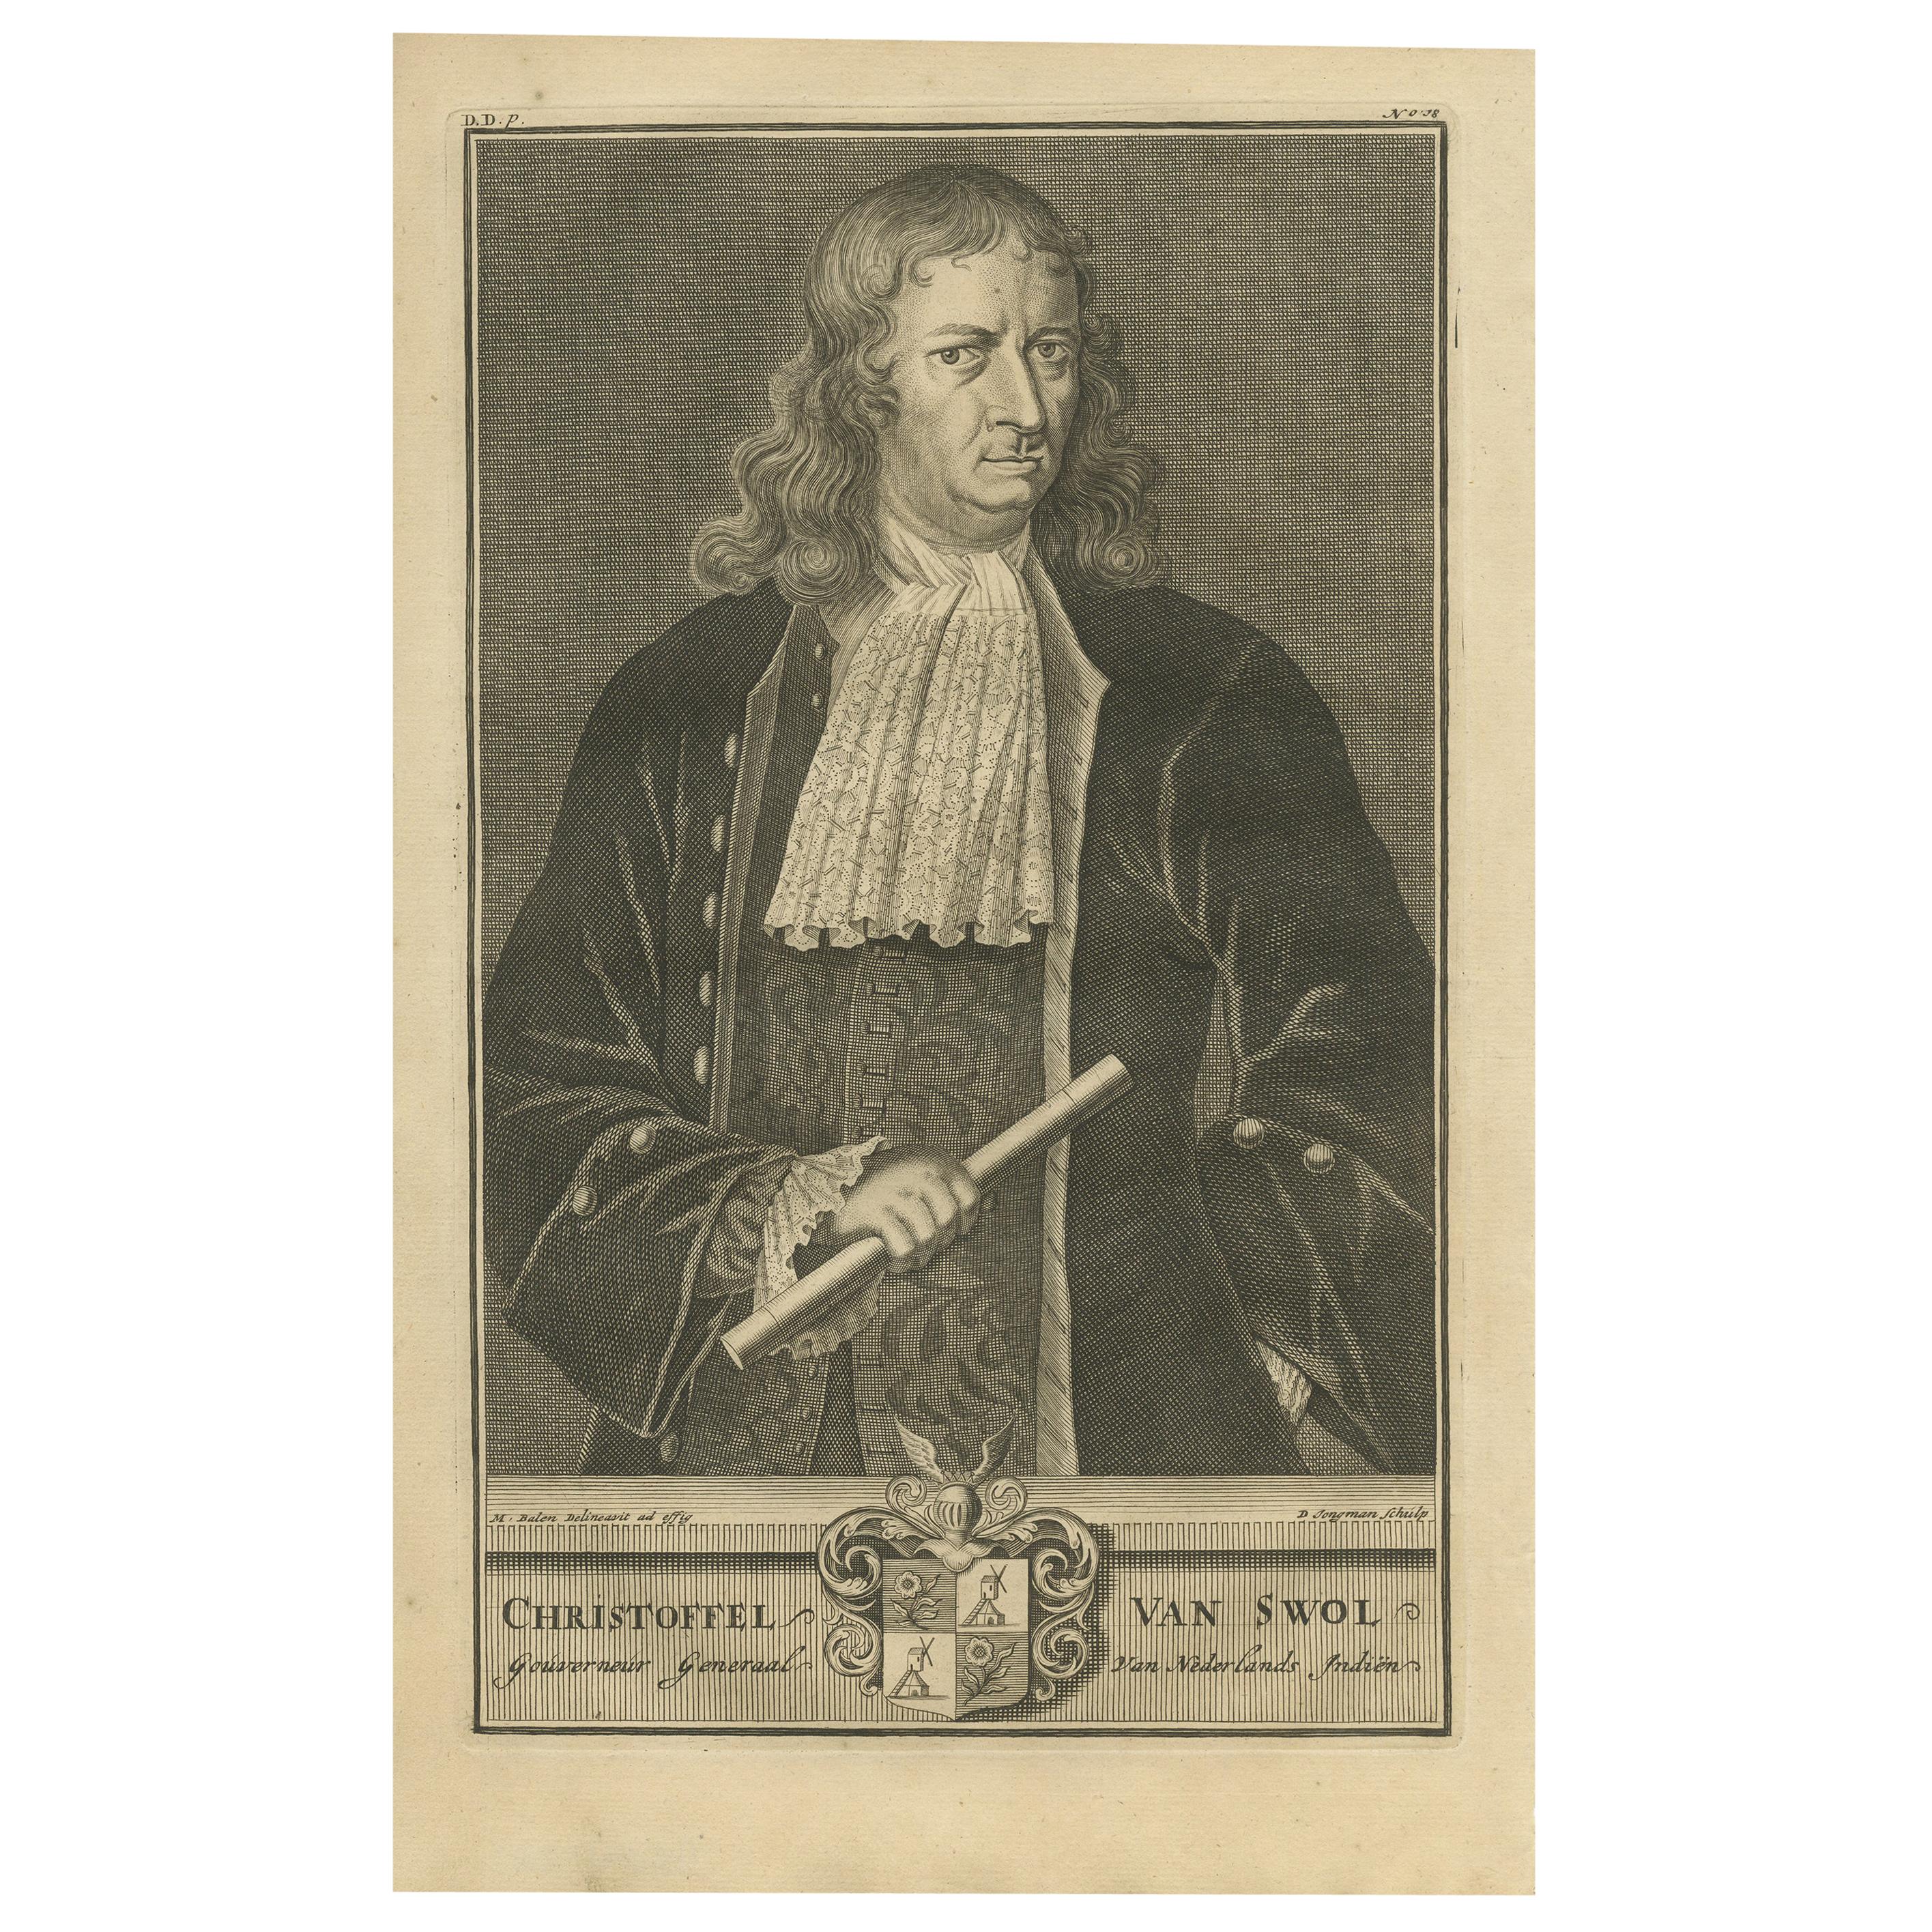 Antique Portrait of Christoffel Van Swoll by Valentijn, 1726